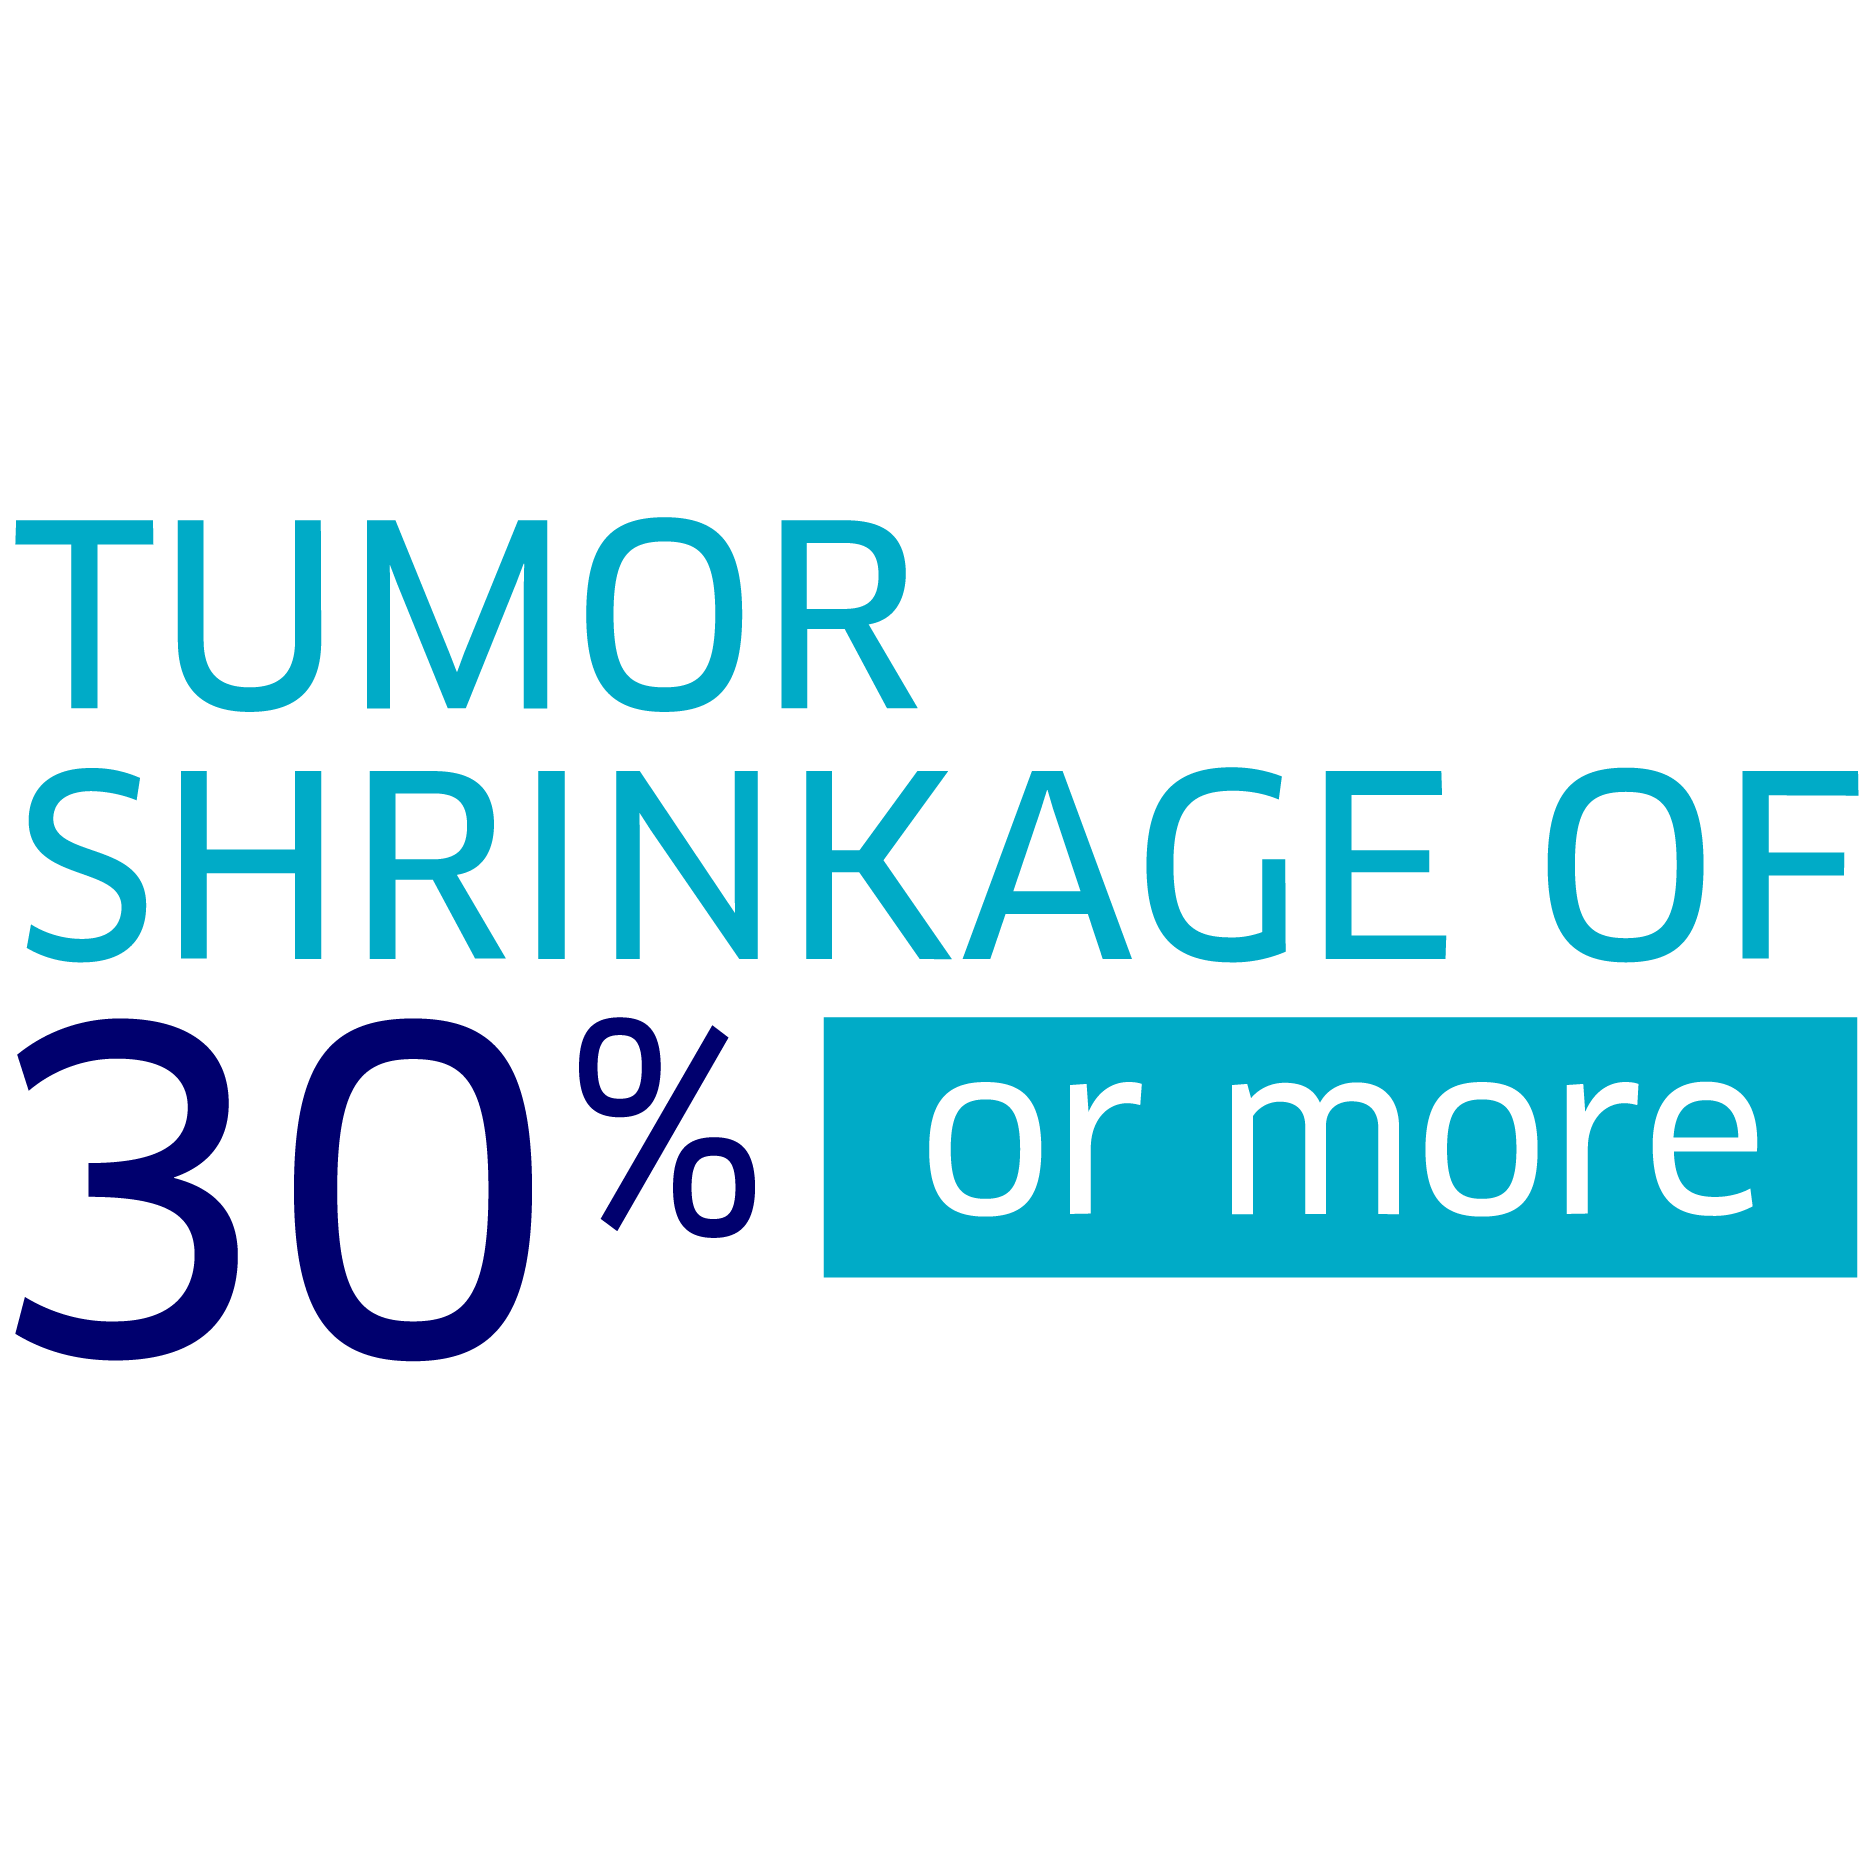 tumor shrinkage of 30% or more